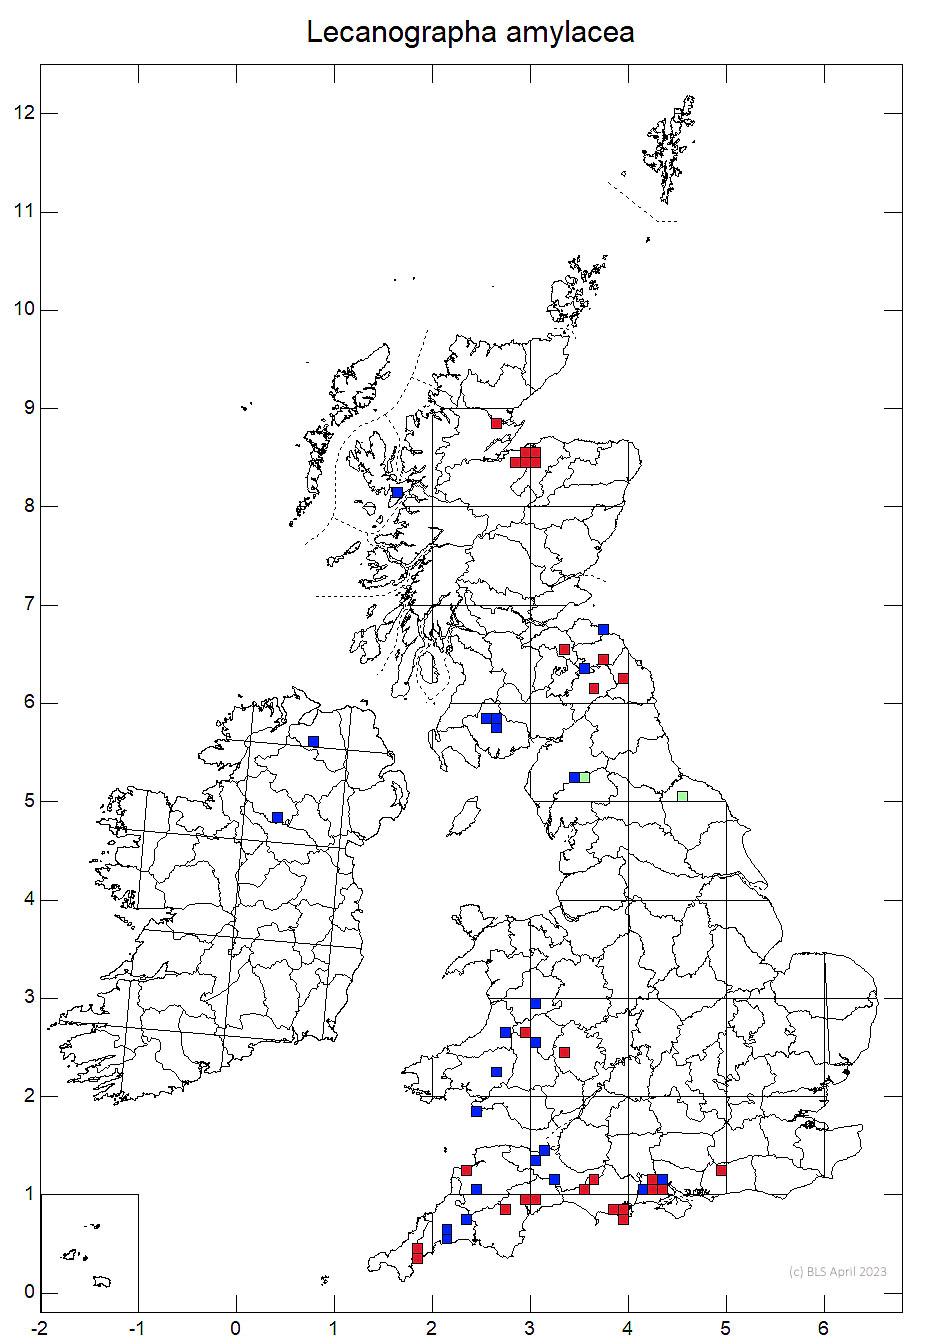 Lecanographa amylacea 10km sq distribution map